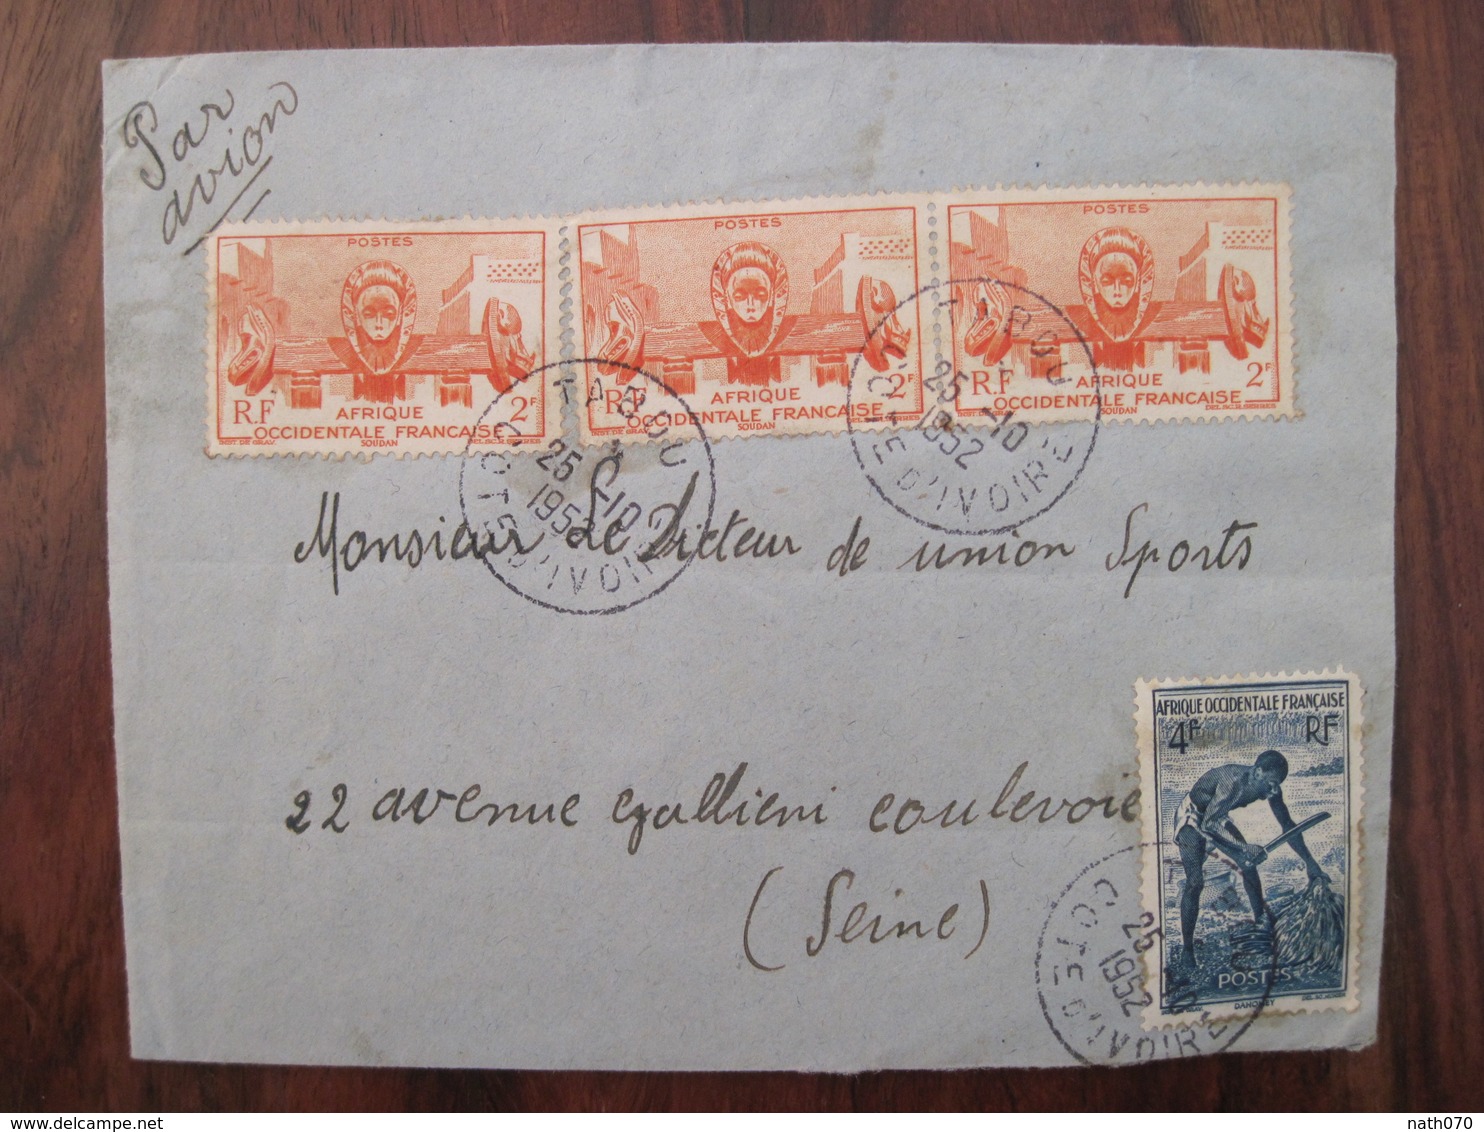 Cote D'Ivoire 1952 France TABOU AOF Timbre Lettre Enveloppe Cover Colonie Elfenbeinküste Ivoiry Coast - Briefe U. Dokumente